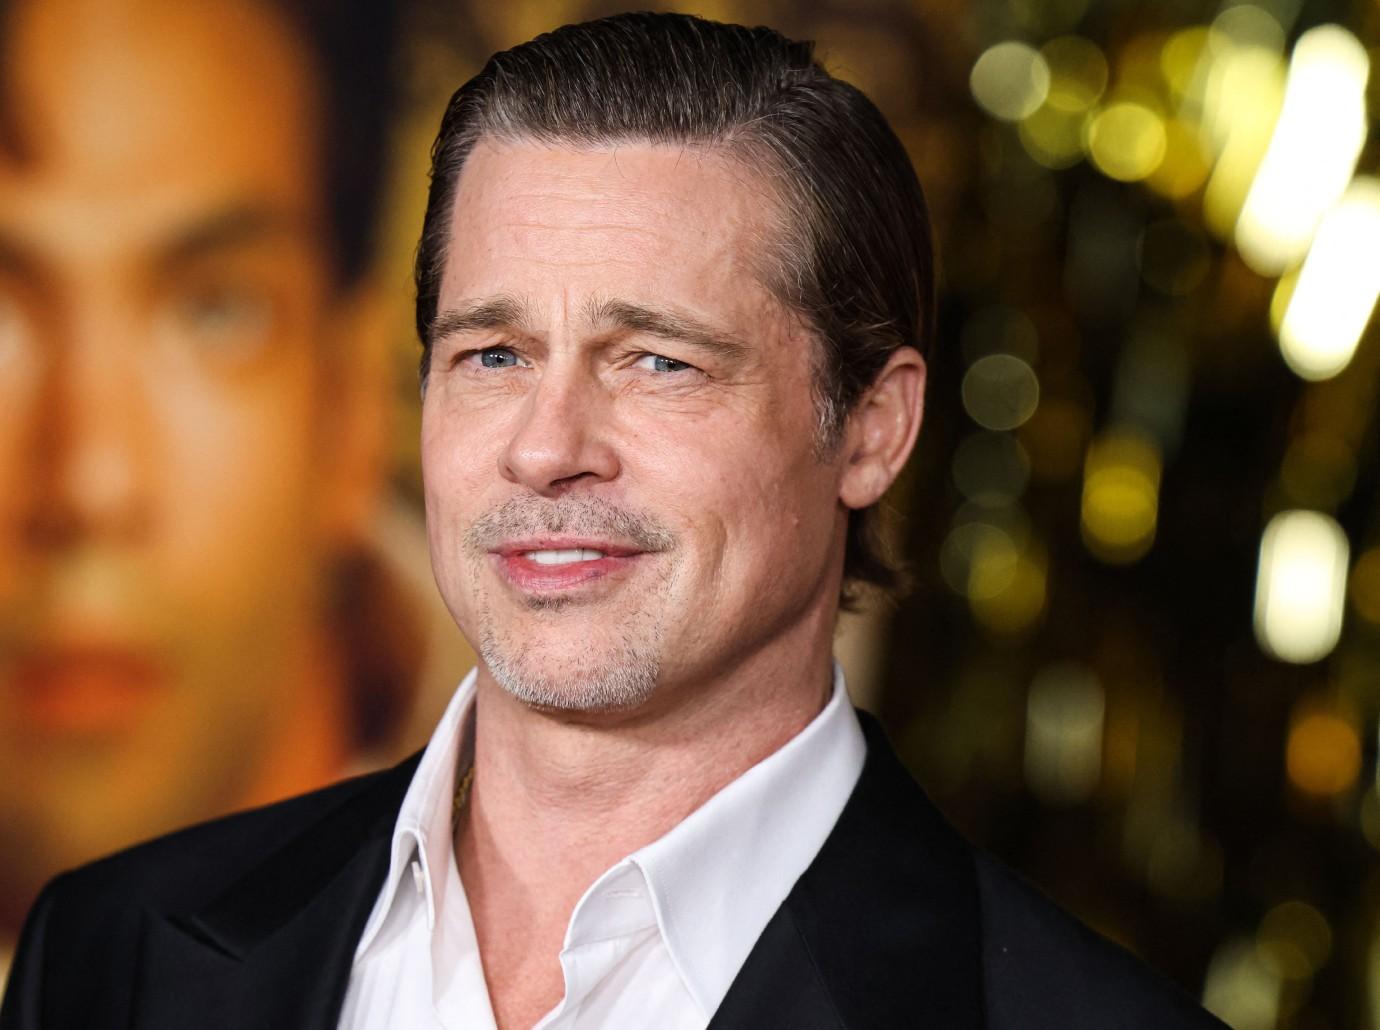 Brad Pitt's Youthful Look Sparks Plastic Surgery Rumors: Photos